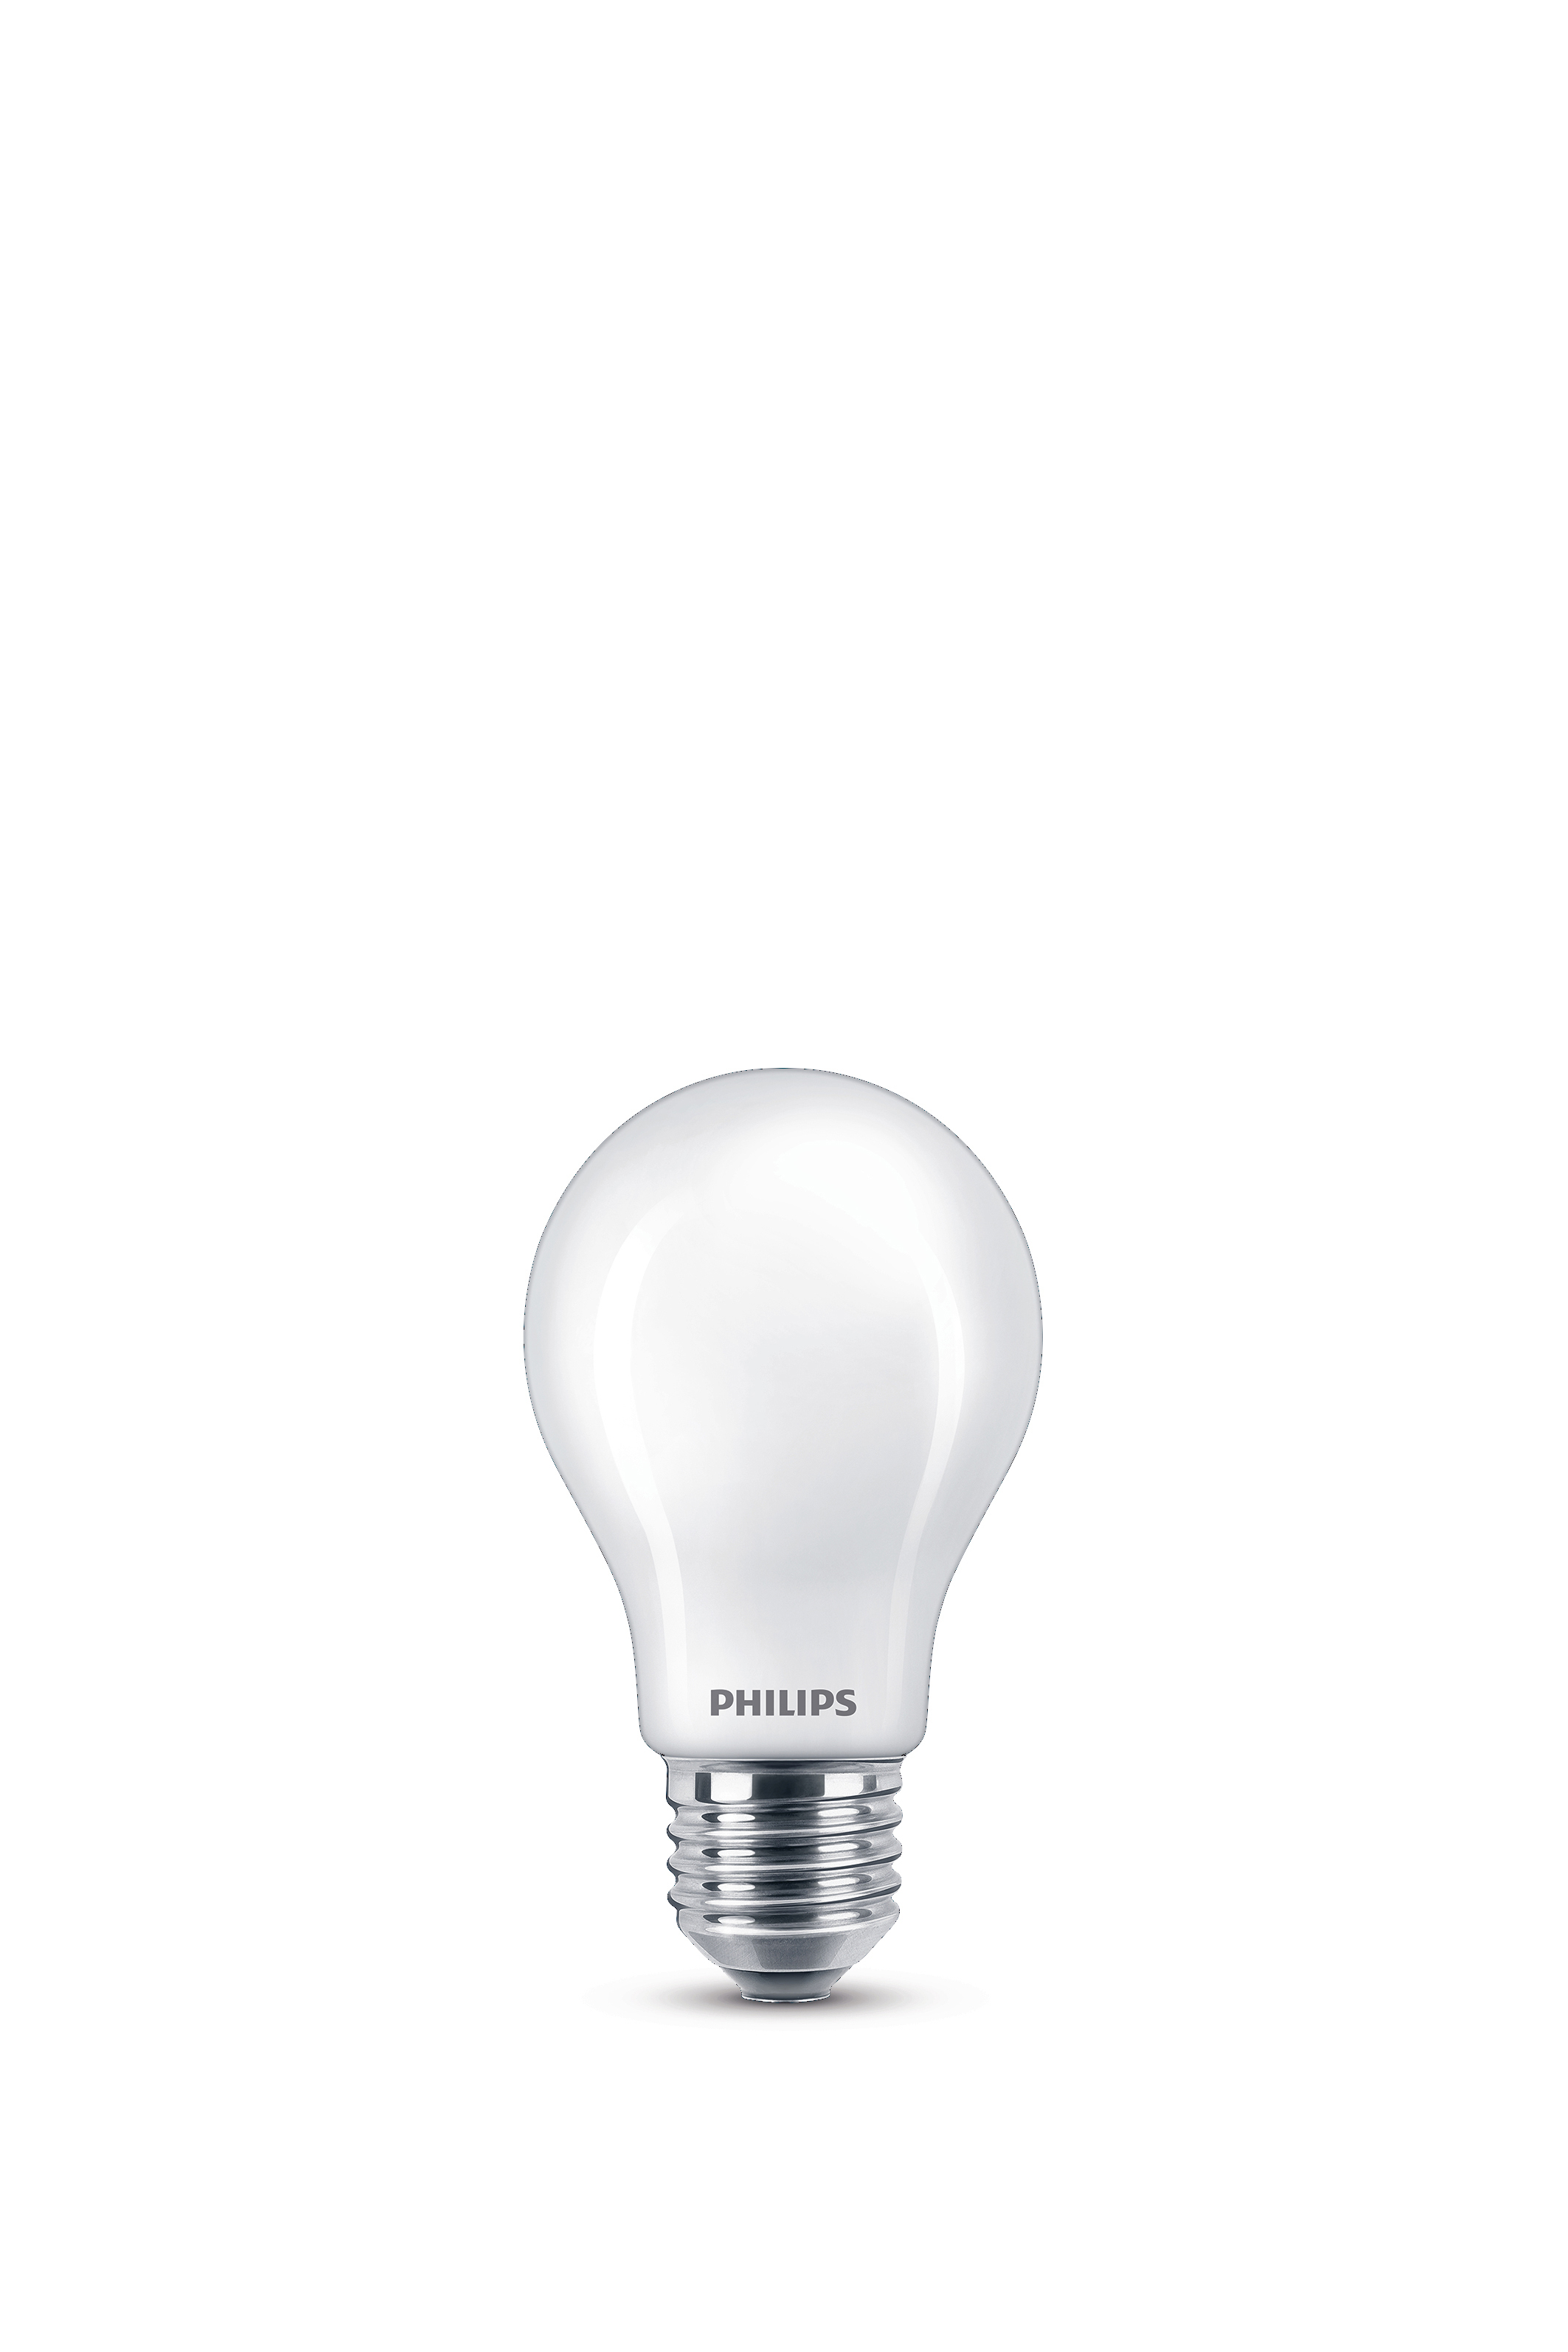 PHILIPS Lampe ersetzt neutralweiß LEDclassic 40W LED Lampe